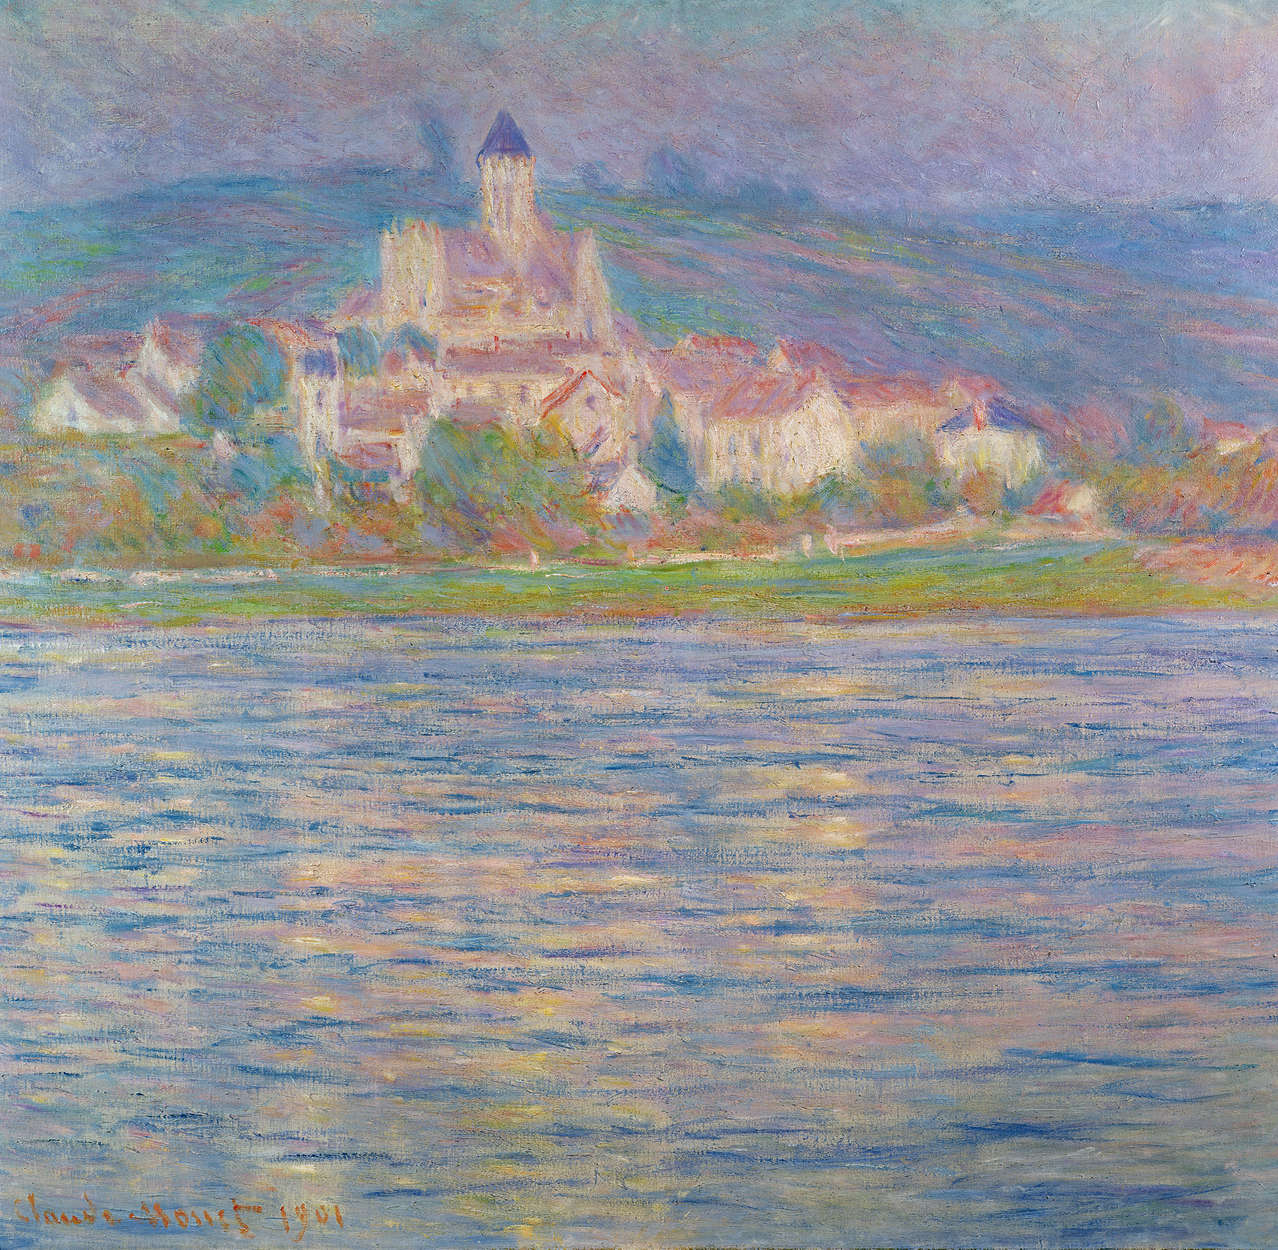             Veduta di Vétheuil" murale di Claude Monet
        